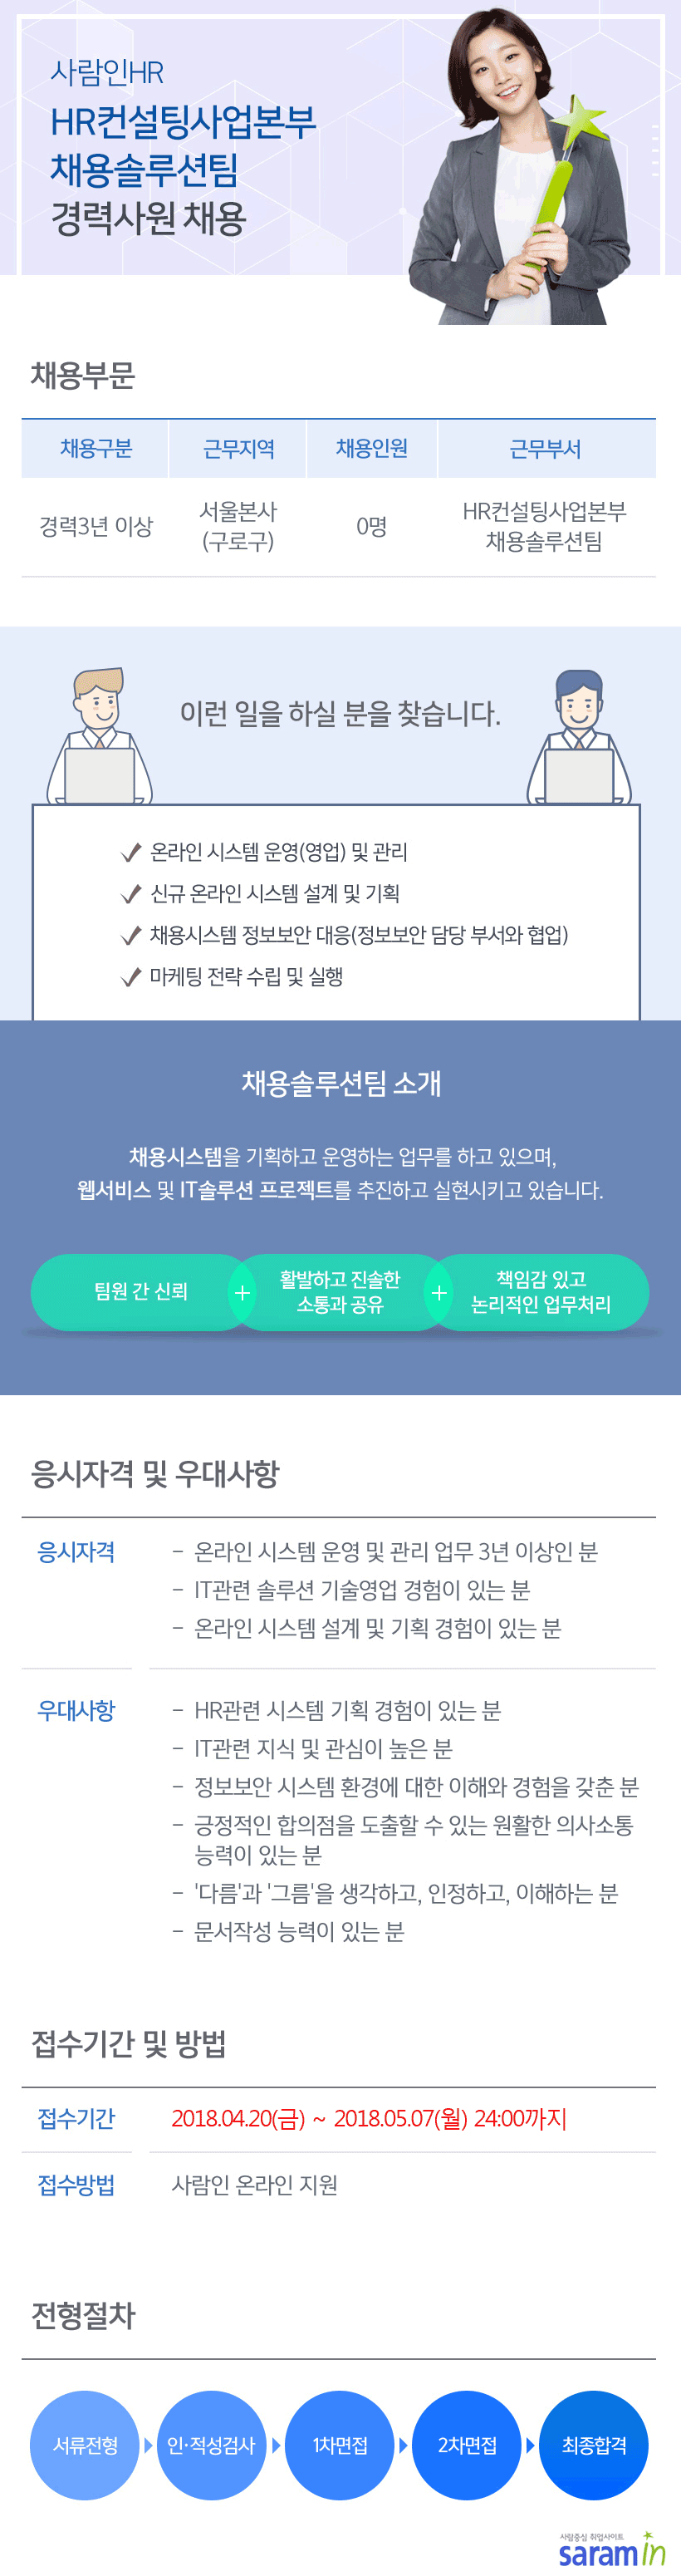 HR컨설팅사업본부 채용솔루션팀 경력사원 채용